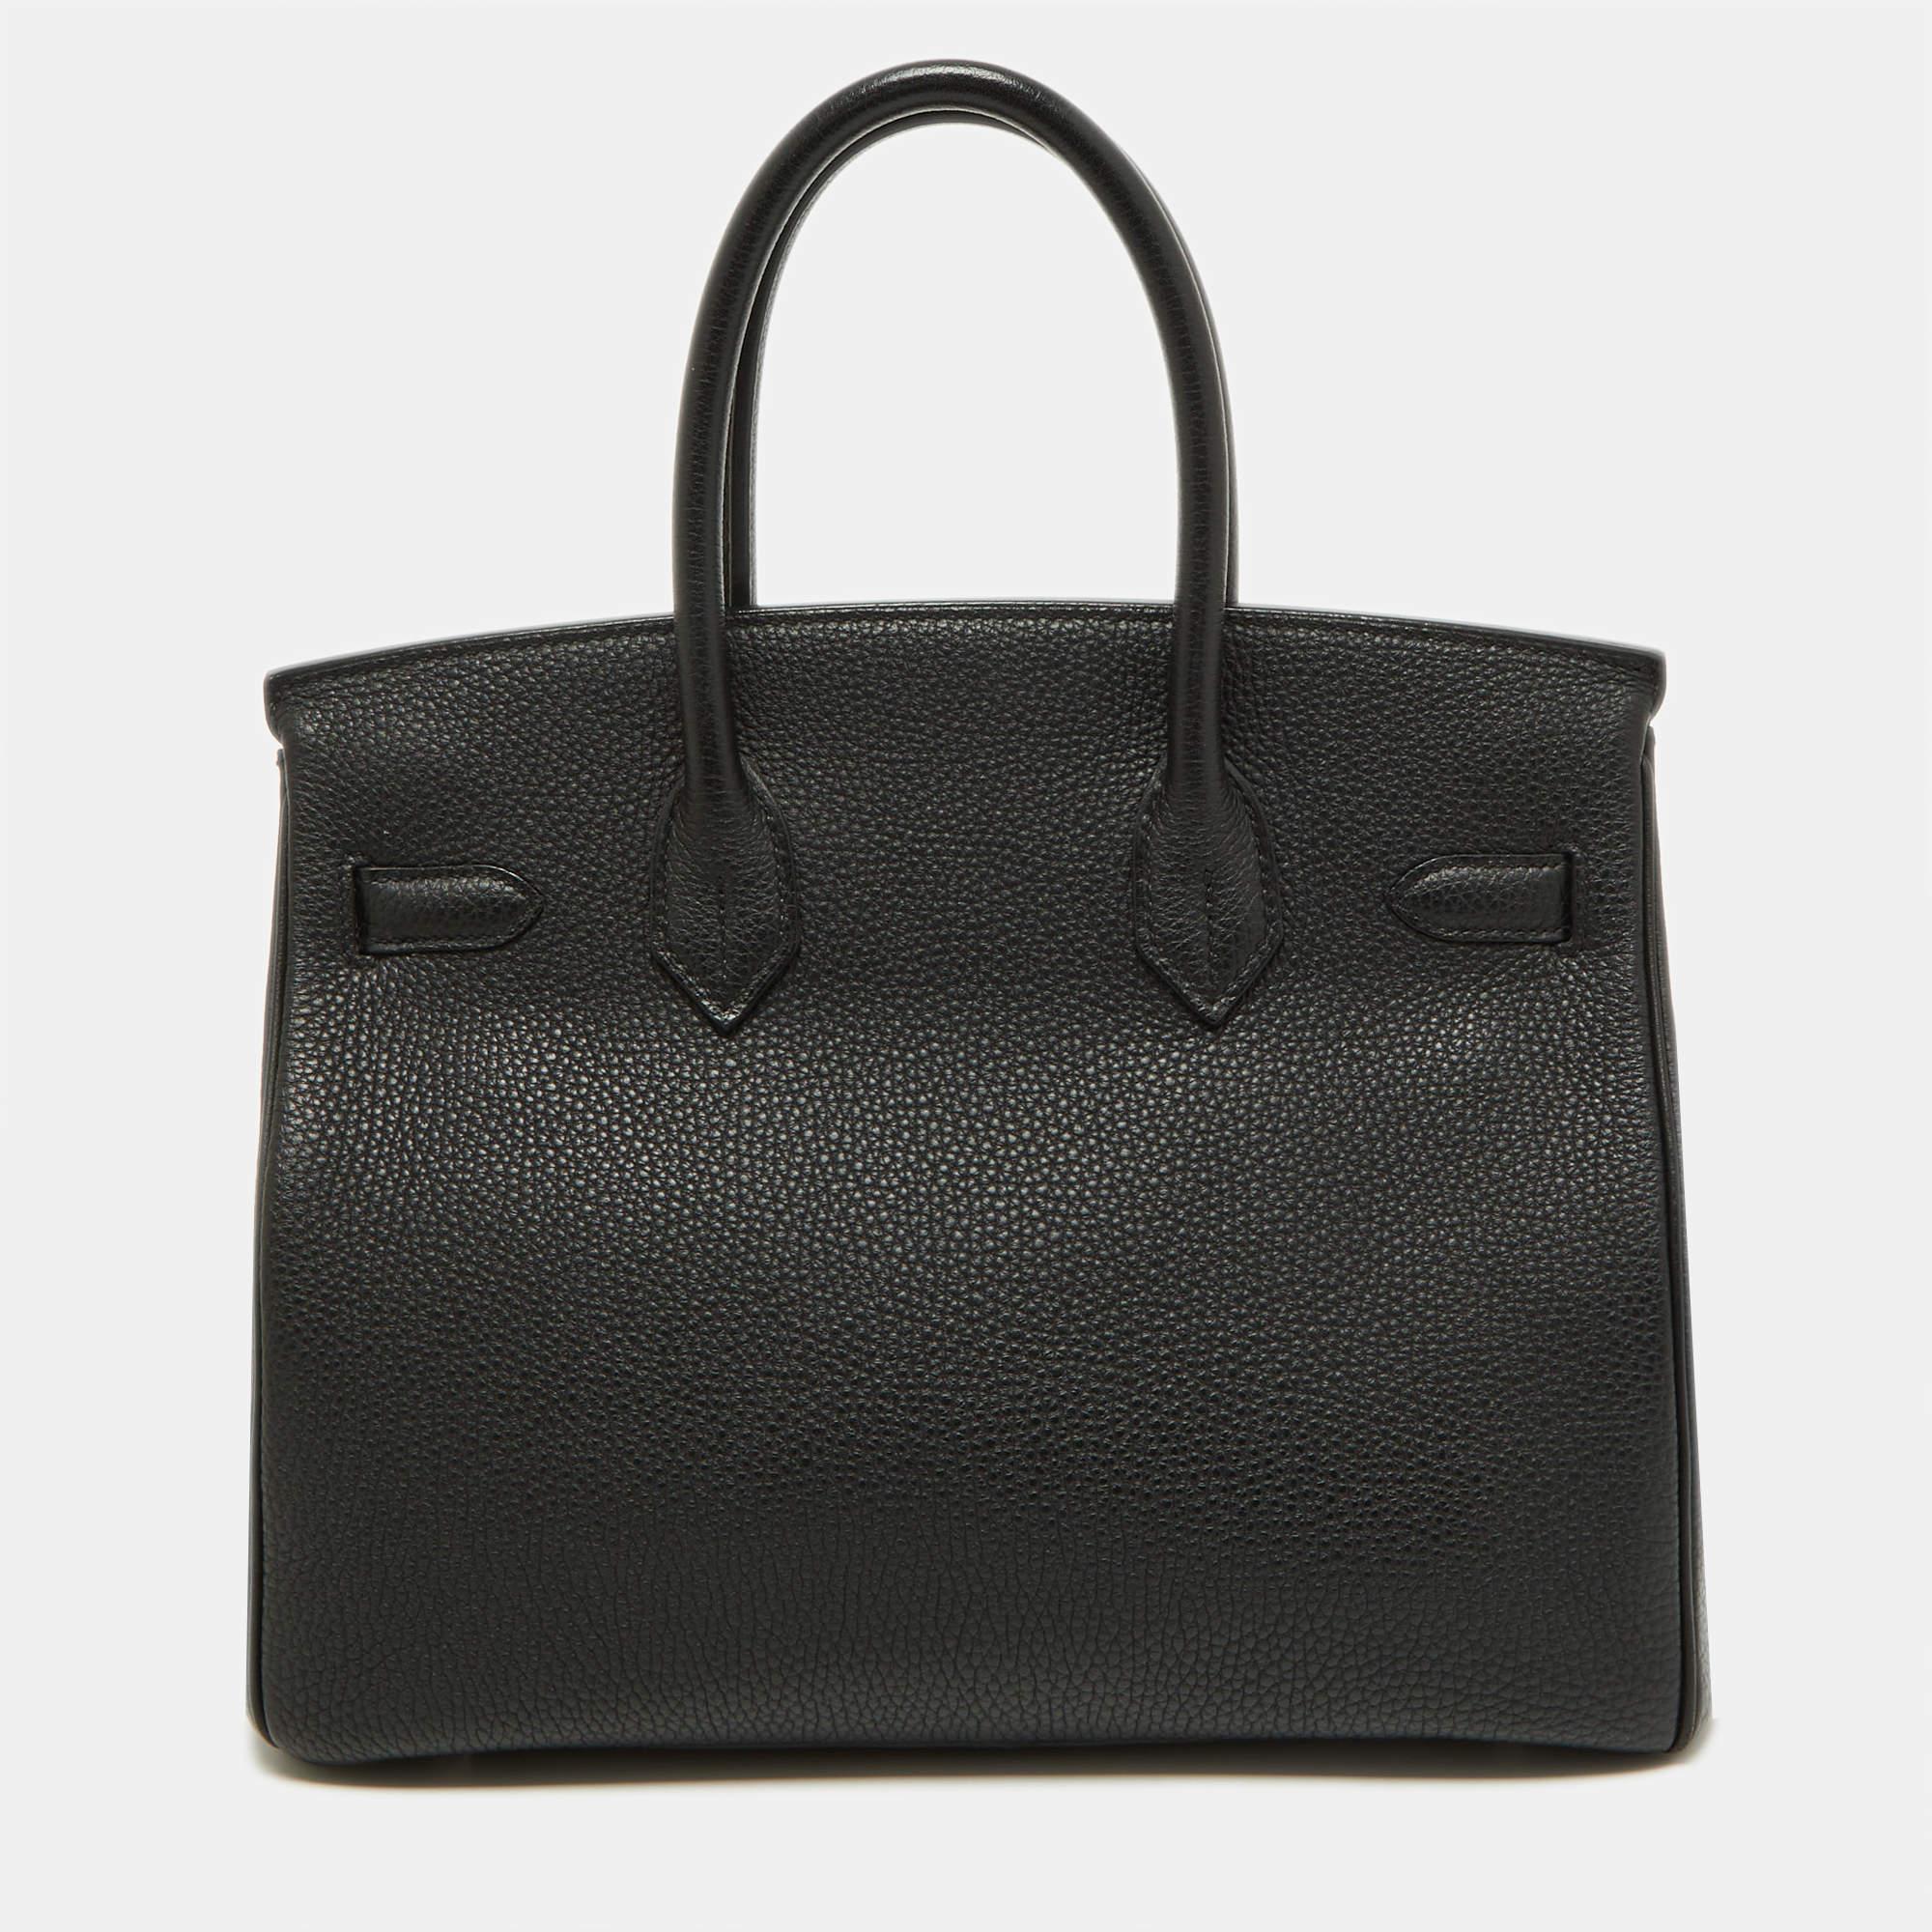 Hermes Black Togo Leather Palladium Finish Birkin 30 Bag 11